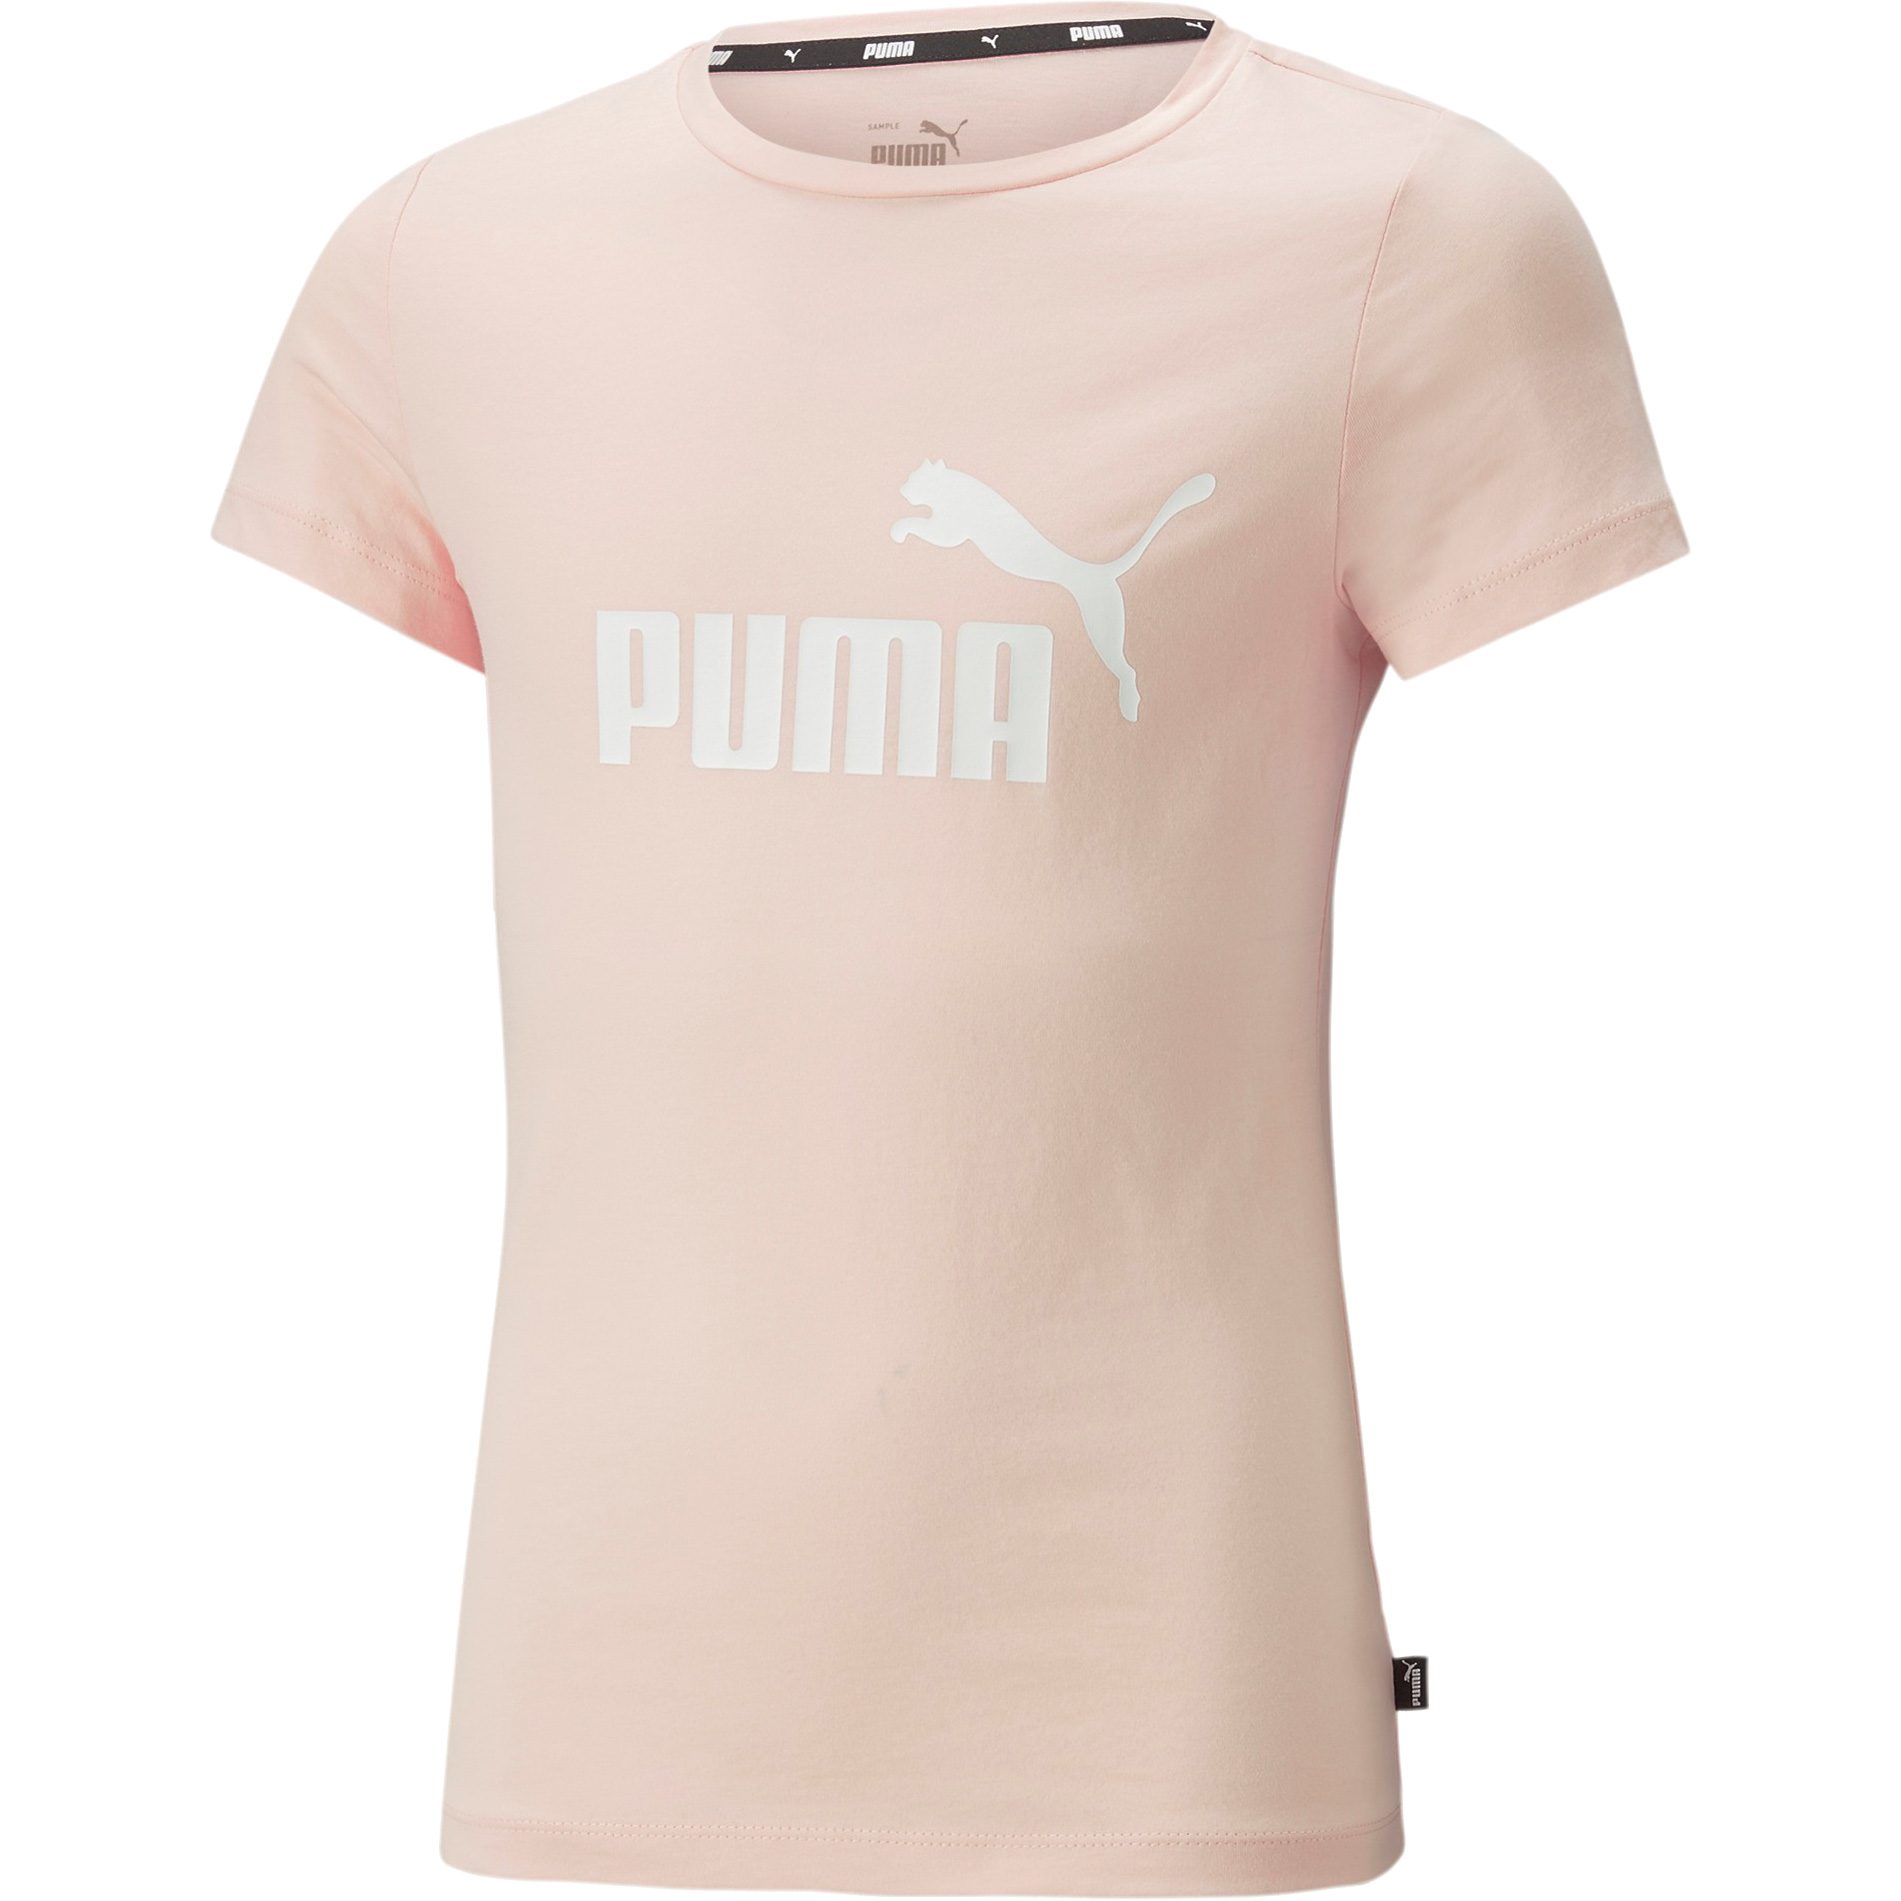 Puma rose Logo Girls - T-Shirt Shop dust at Essentials Bittl Sport